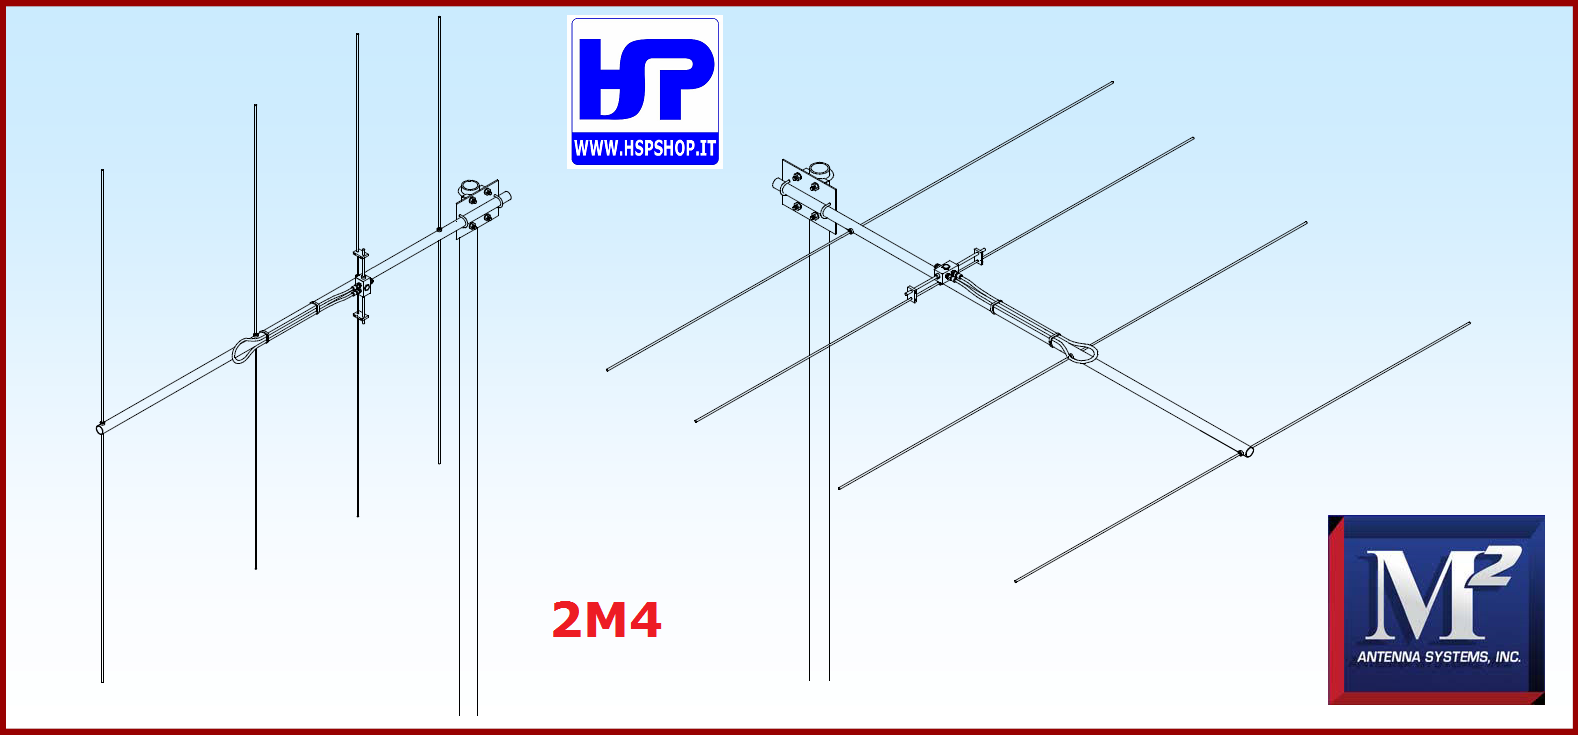 M2 - 2M4 - 4 ELEMENTS VHF 144-148 MHz